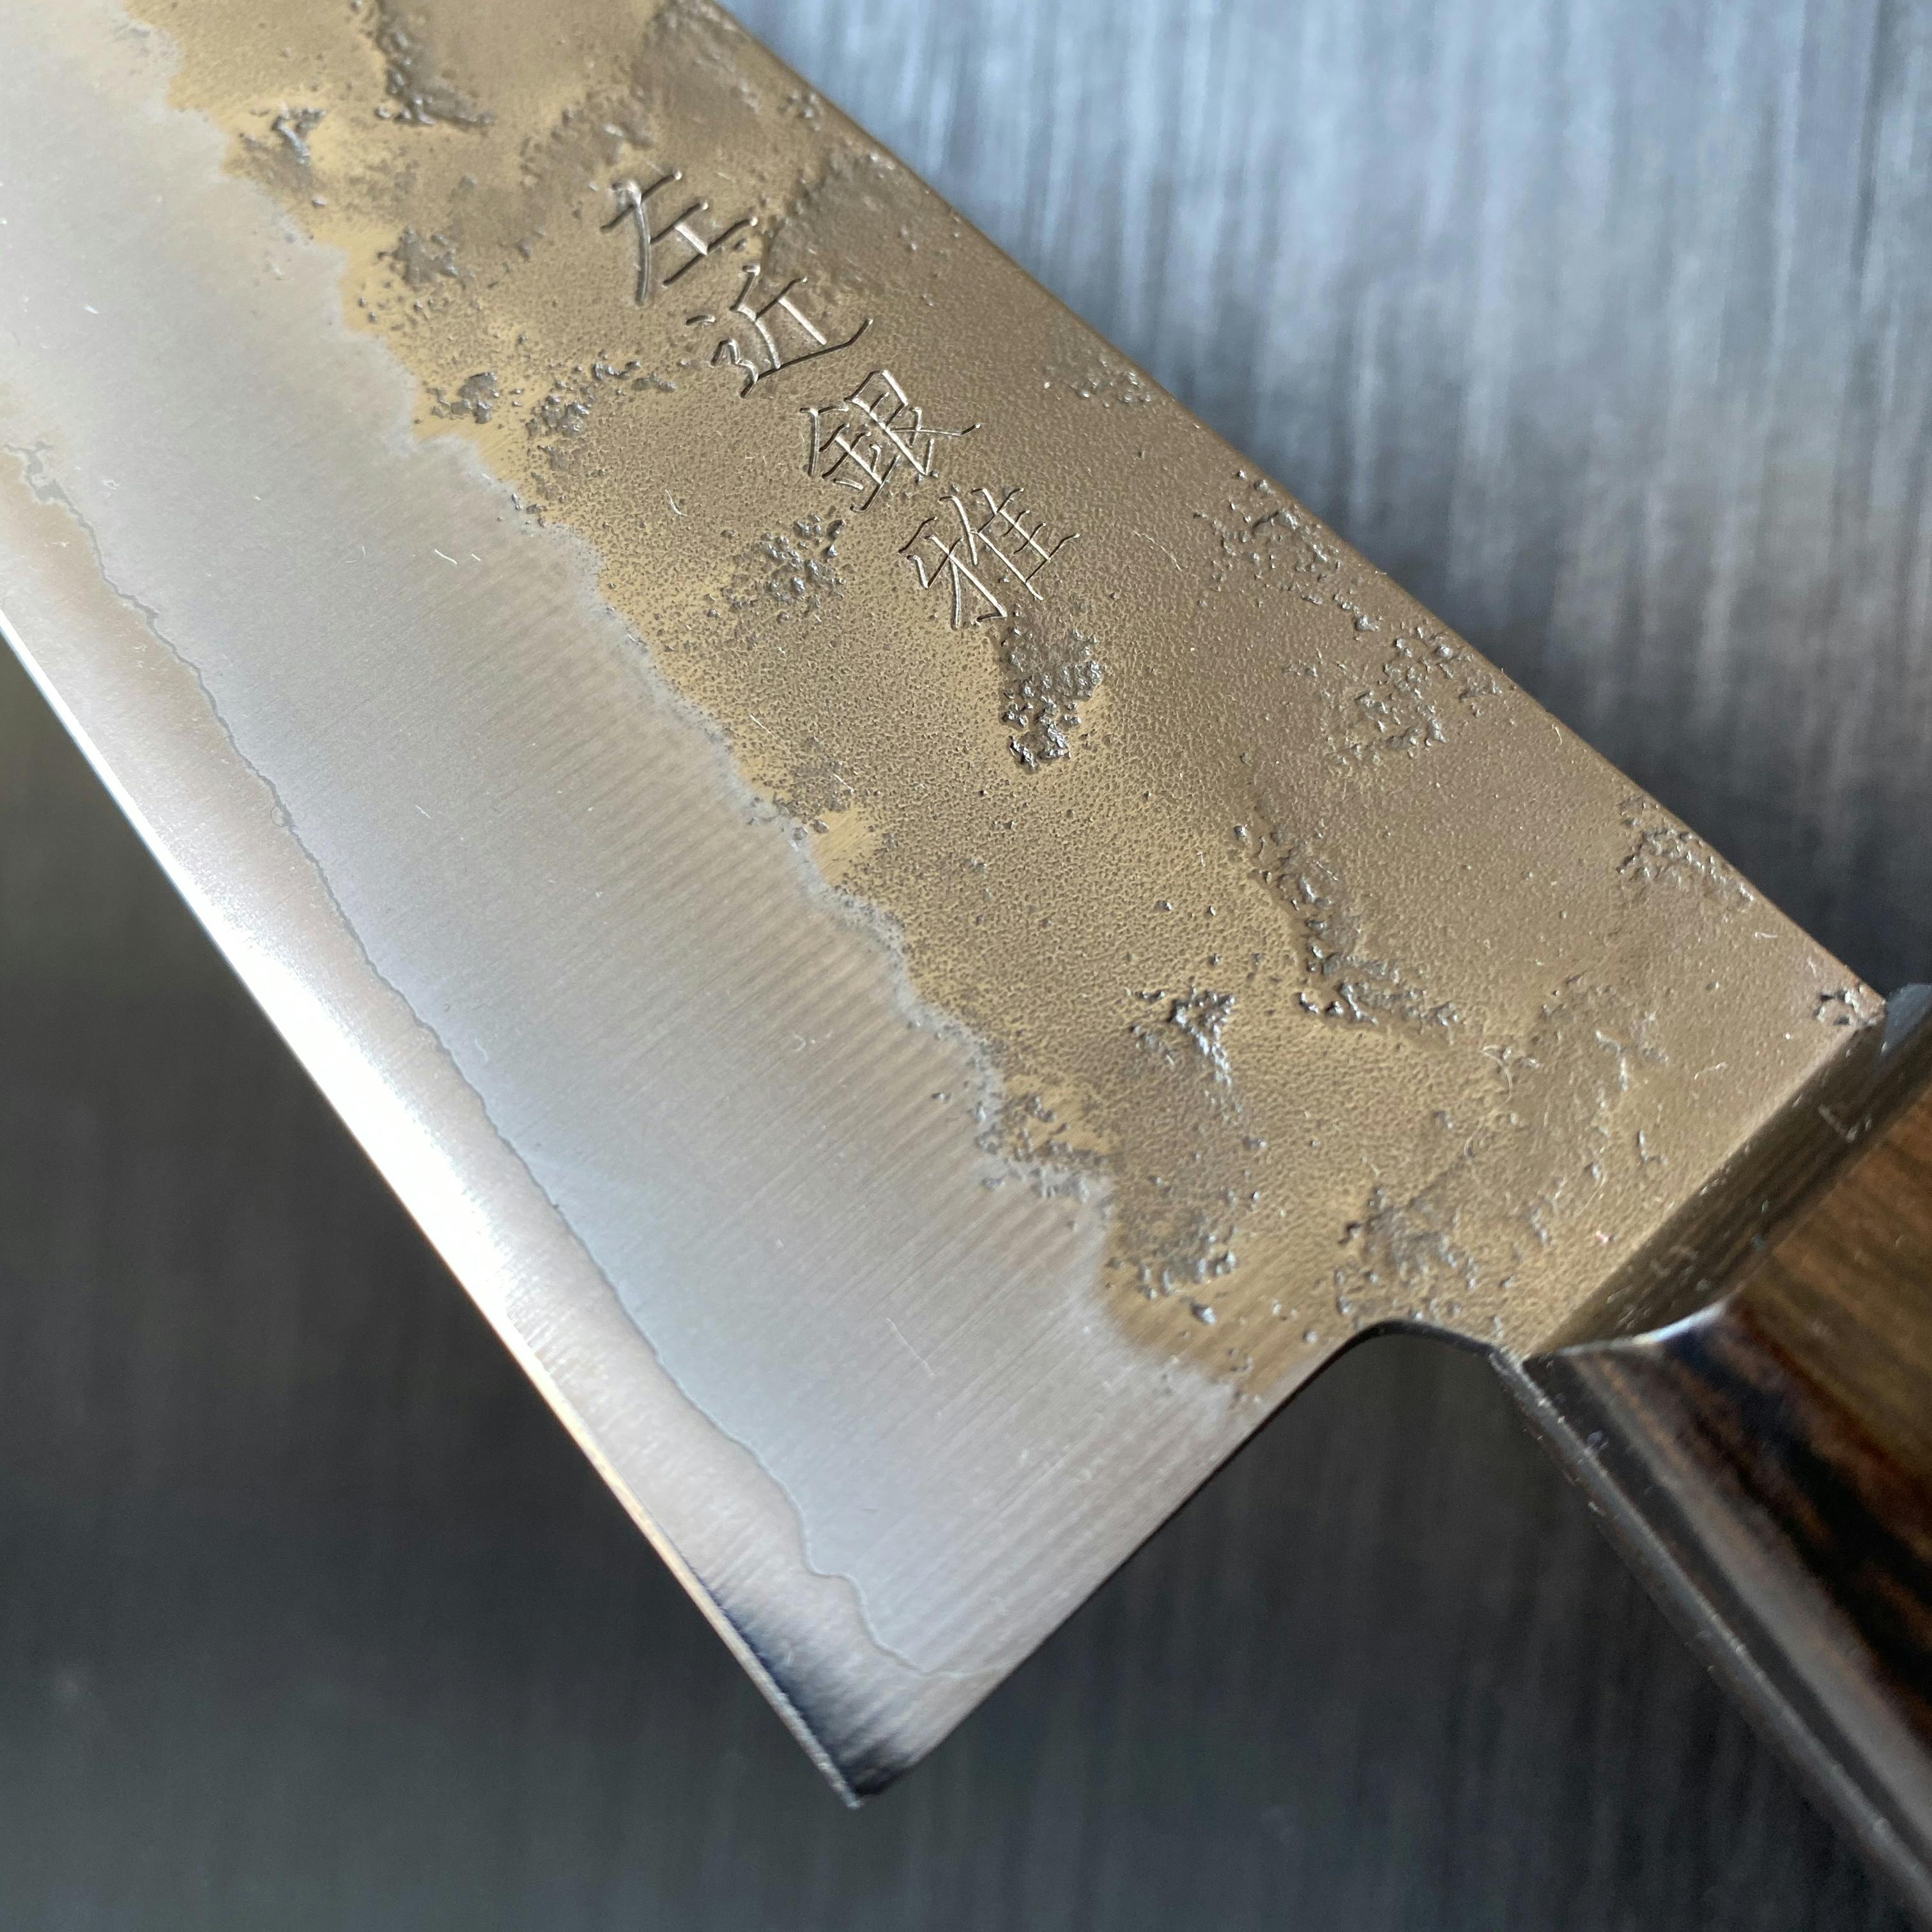 Japanese Chef Knives by SharpEdge Hokiyama Gyuto